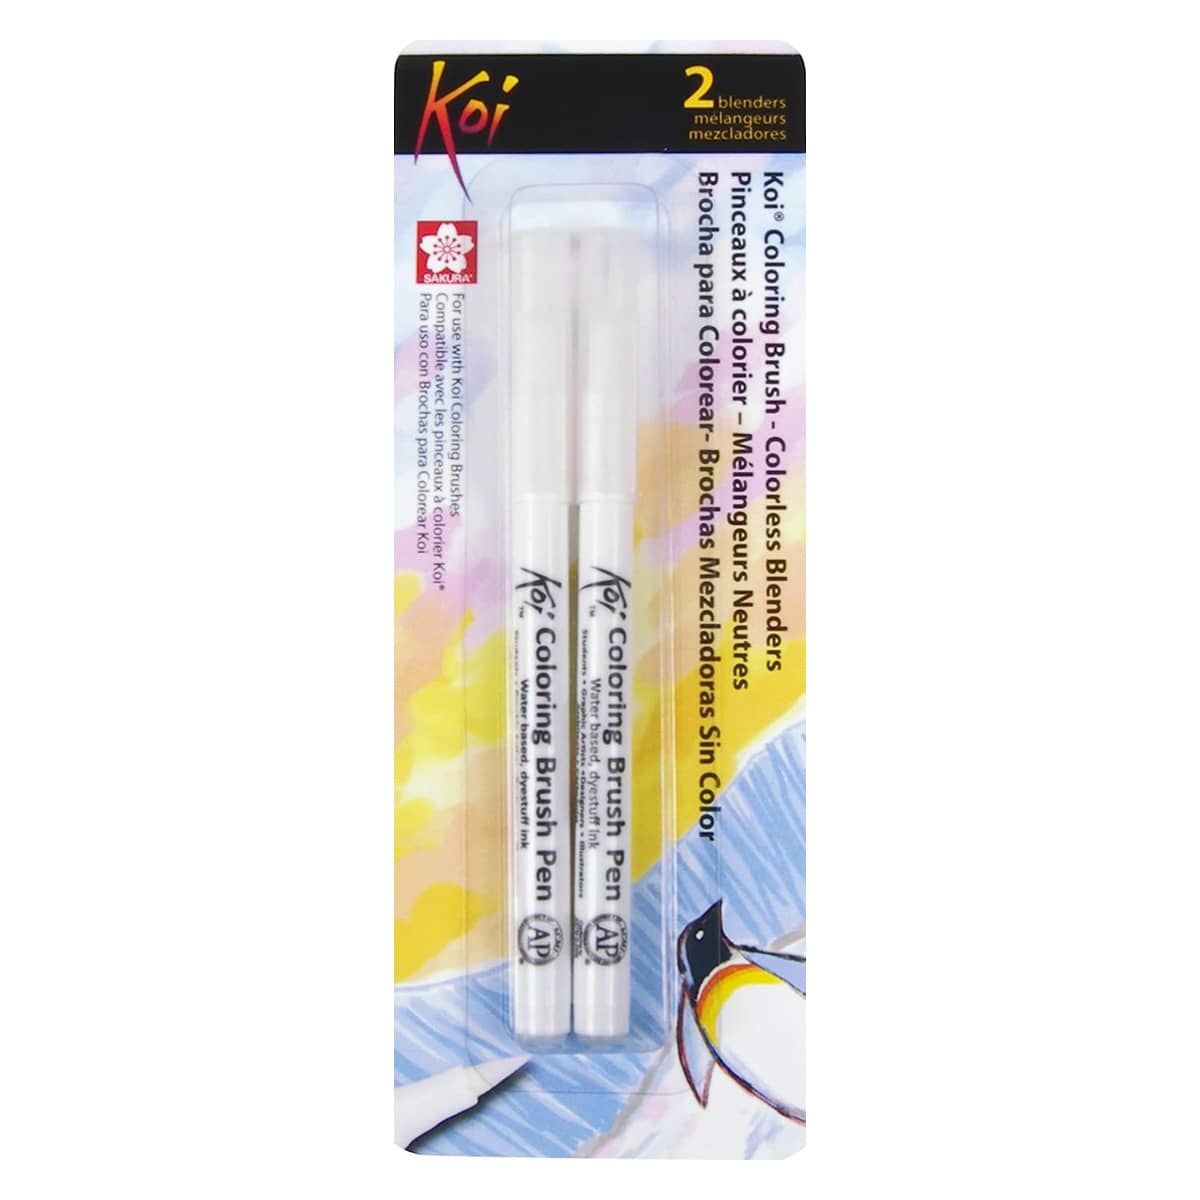 Sakura Koi Colorless Blender Pens, Pack of 2